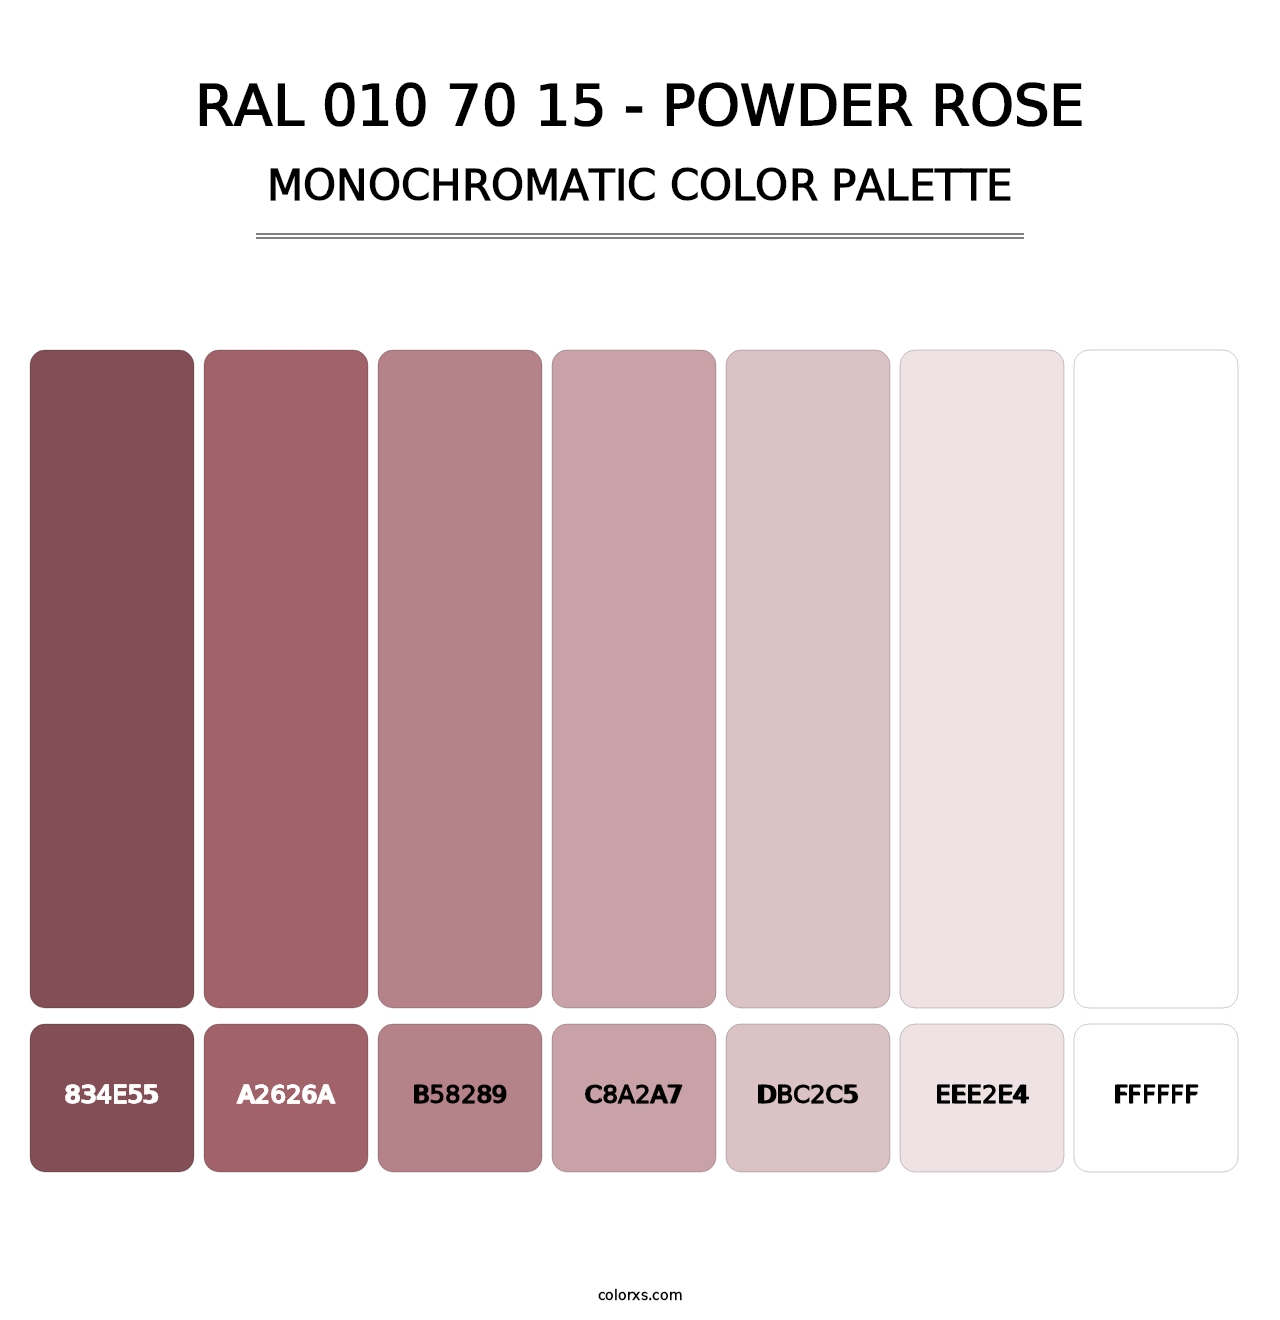 RAL 010 70 15 - Powder Rose - Monochromatic Color Palette